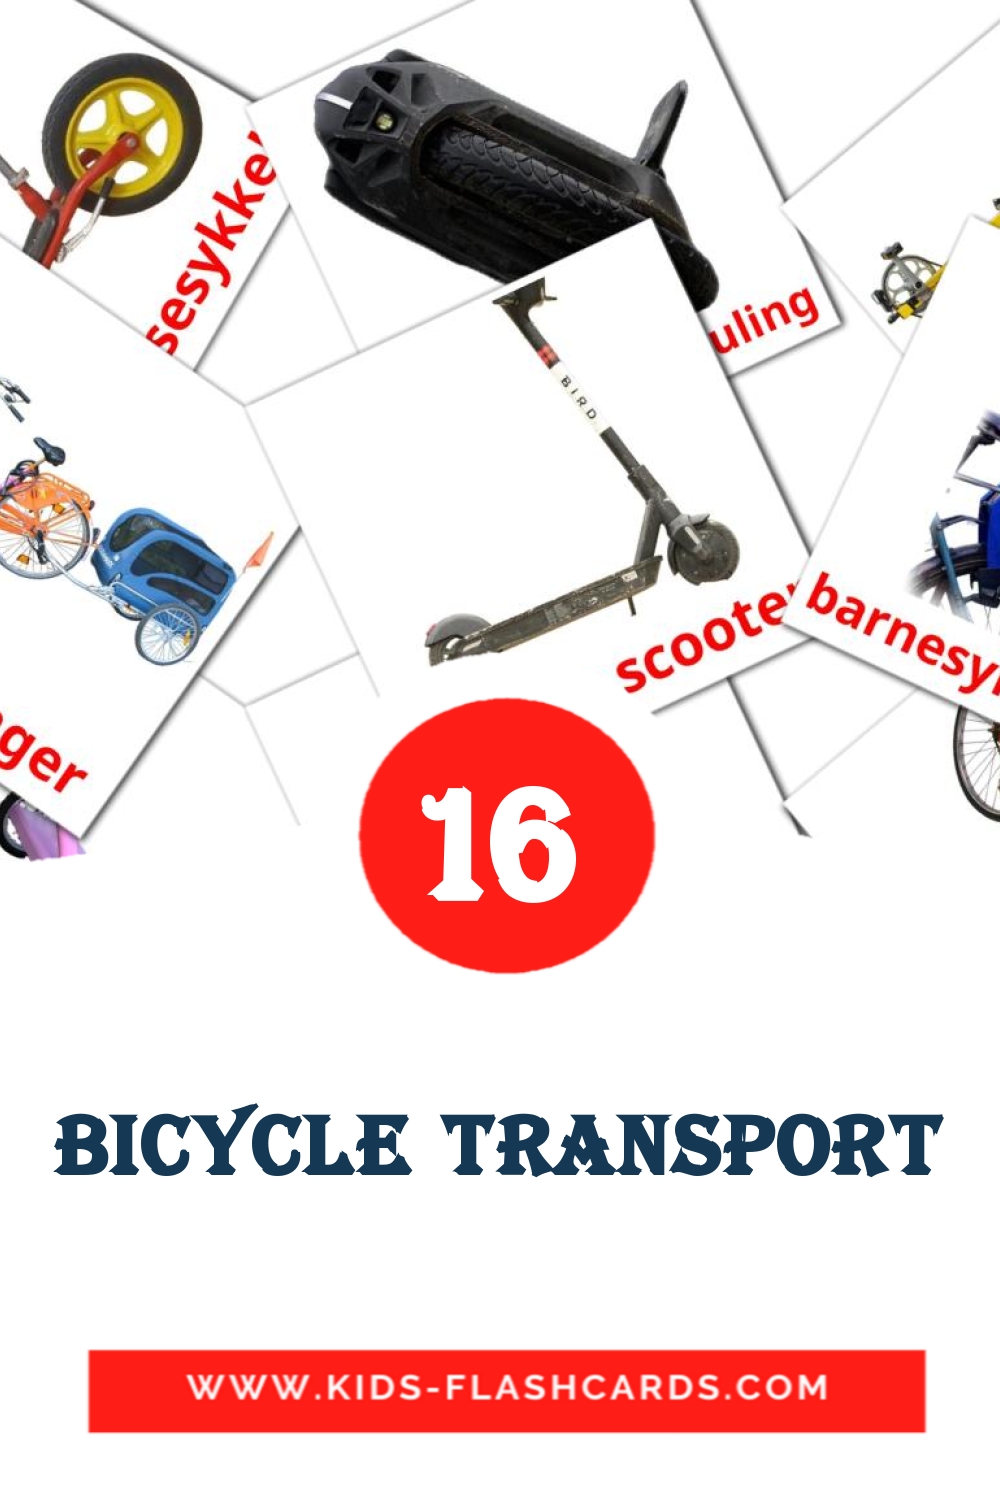 16 carte illustrate di Bicycle transport per la scuola materna in norvegese